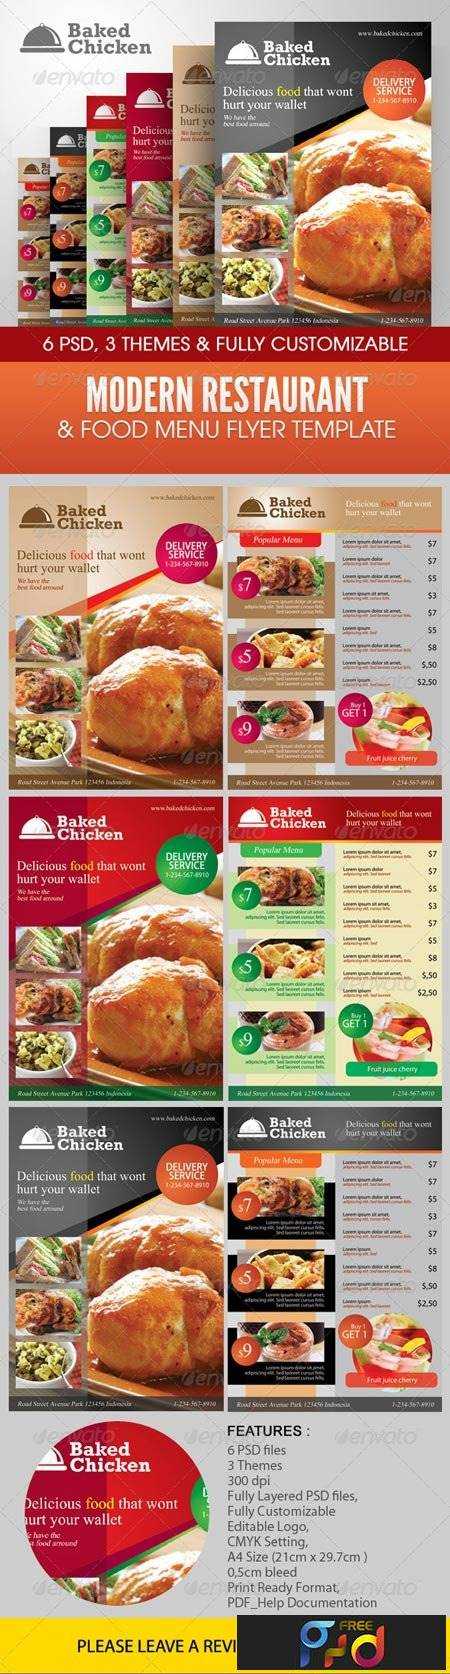 freepsdvn-com_1409803835_modern-restaurant-food-menu-flyer-template-2305259